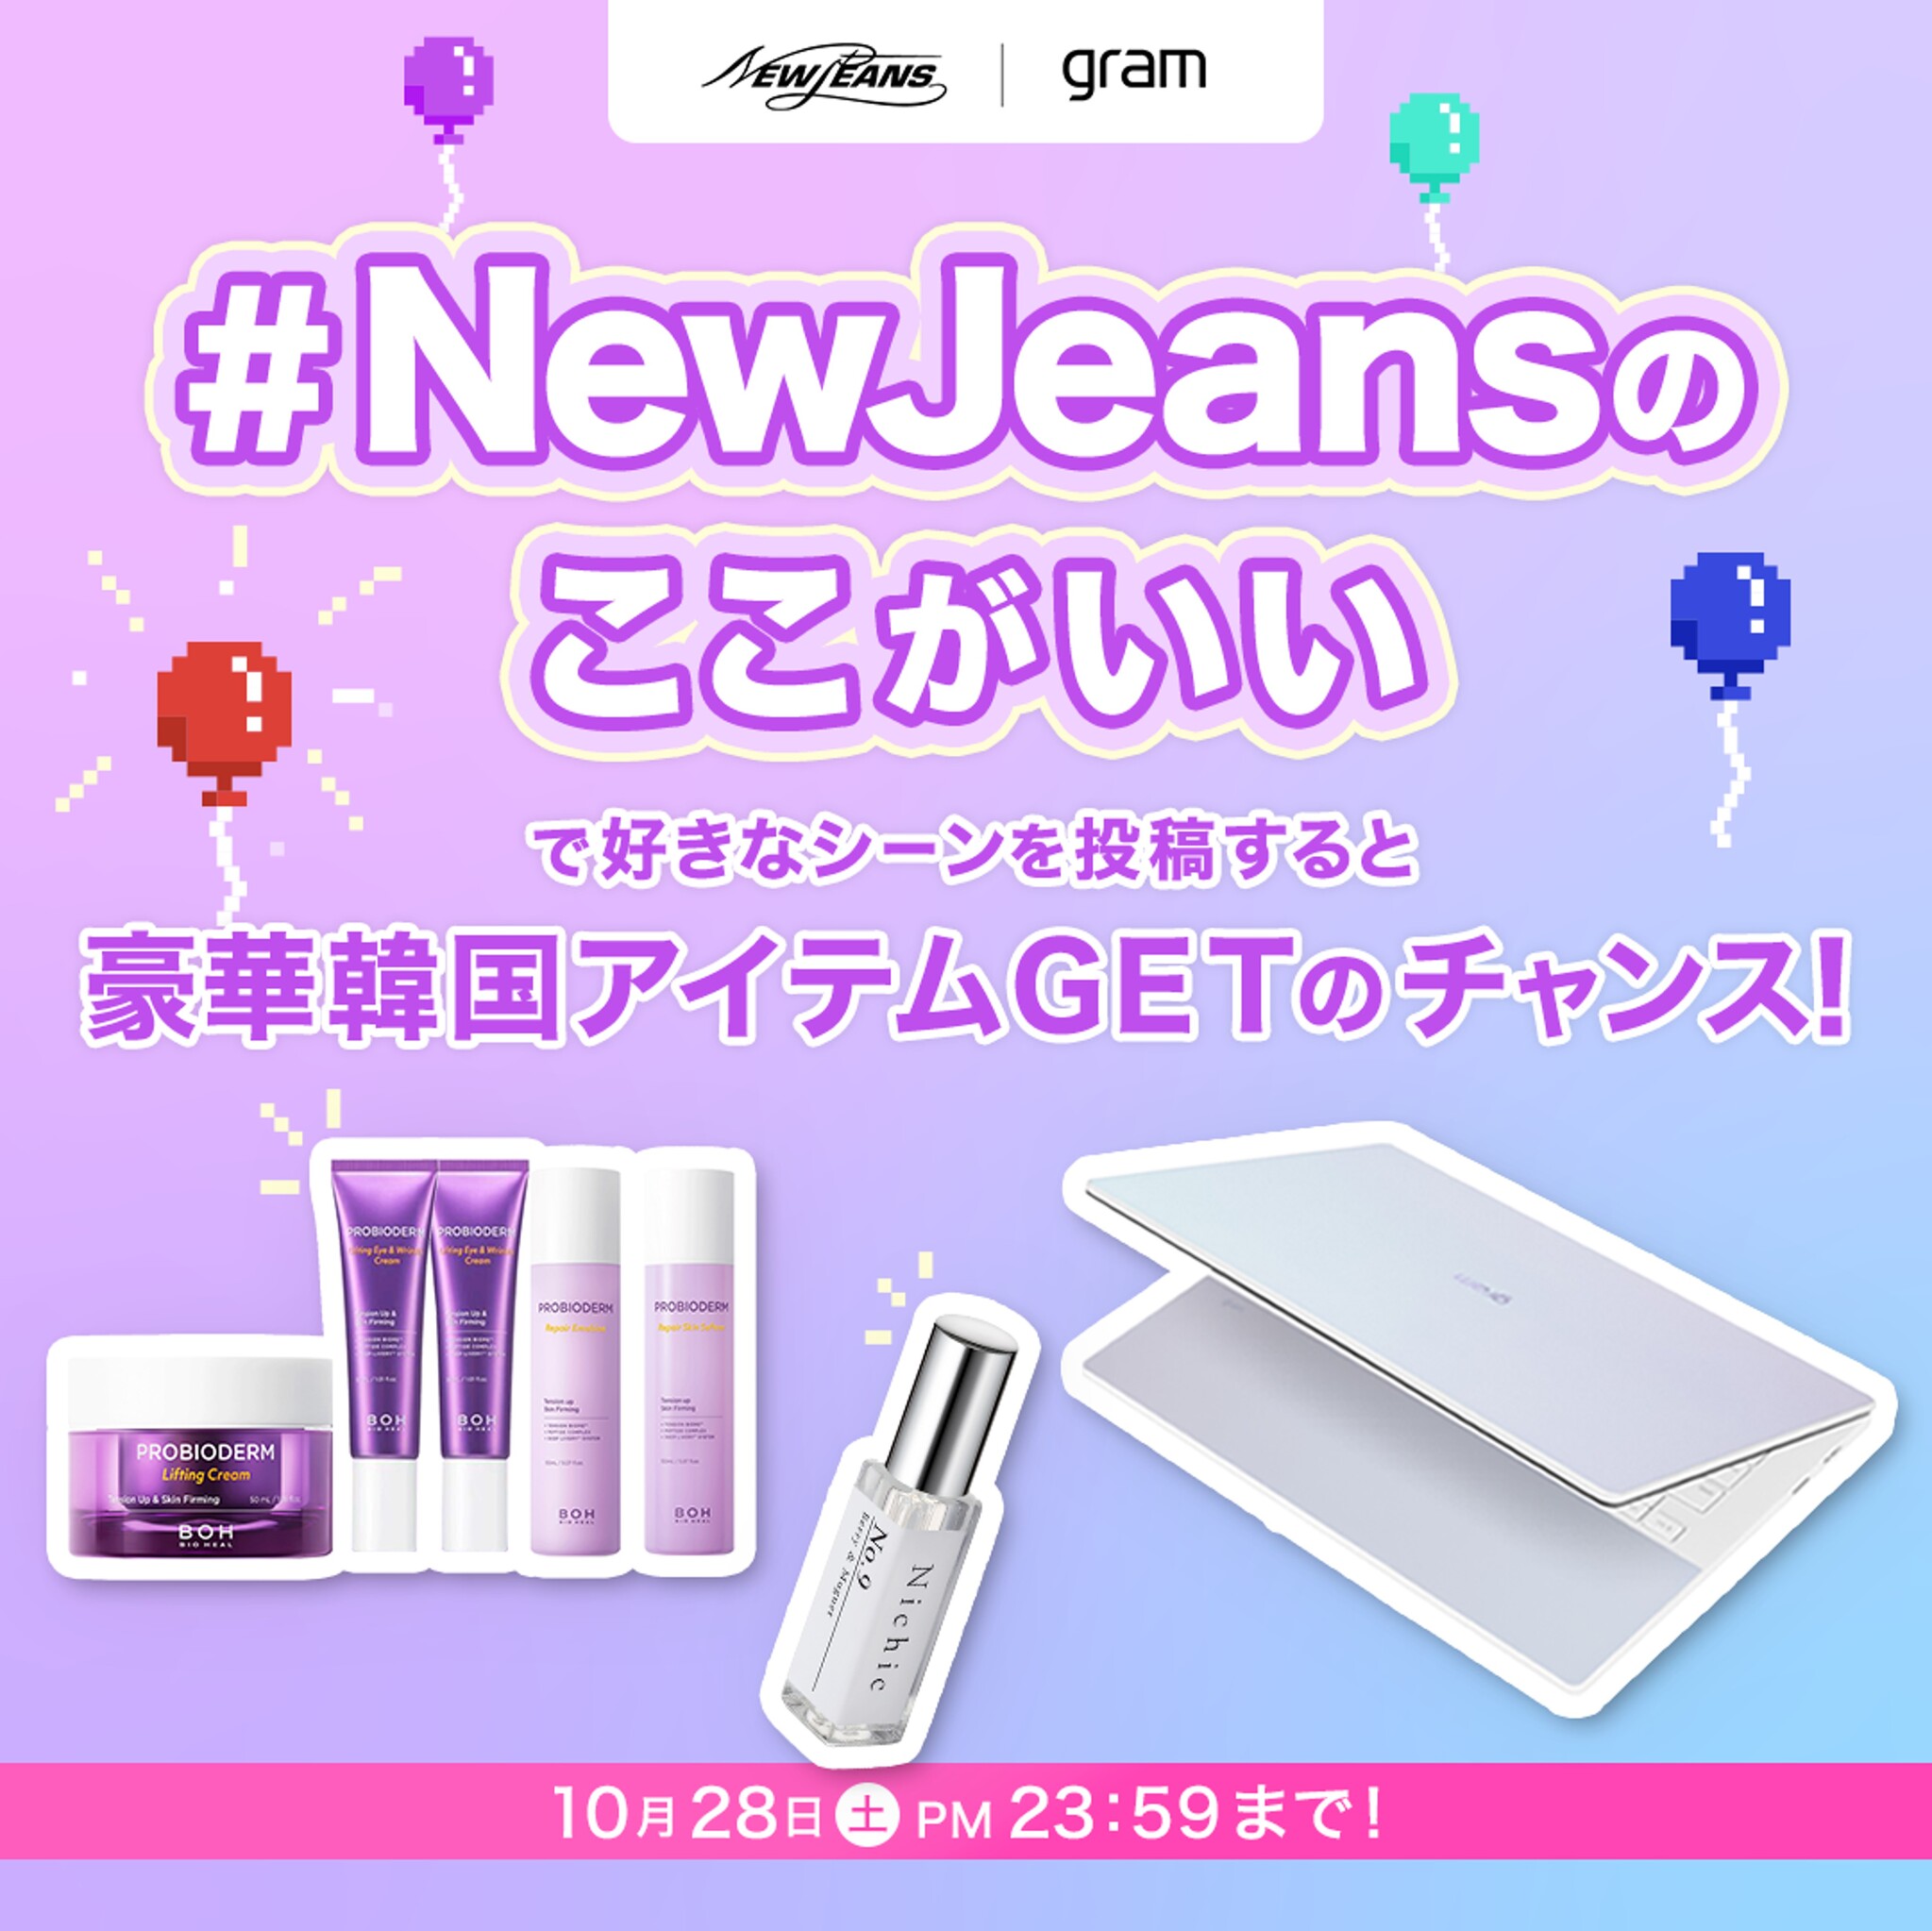 ‘LG그램 스타일’ 모바일 노트북과 한국 인기 화장품을 받아가세요!  “#NewJeans 캠페인의 좋은 점” |  LG전자재팬(주) 보도자료